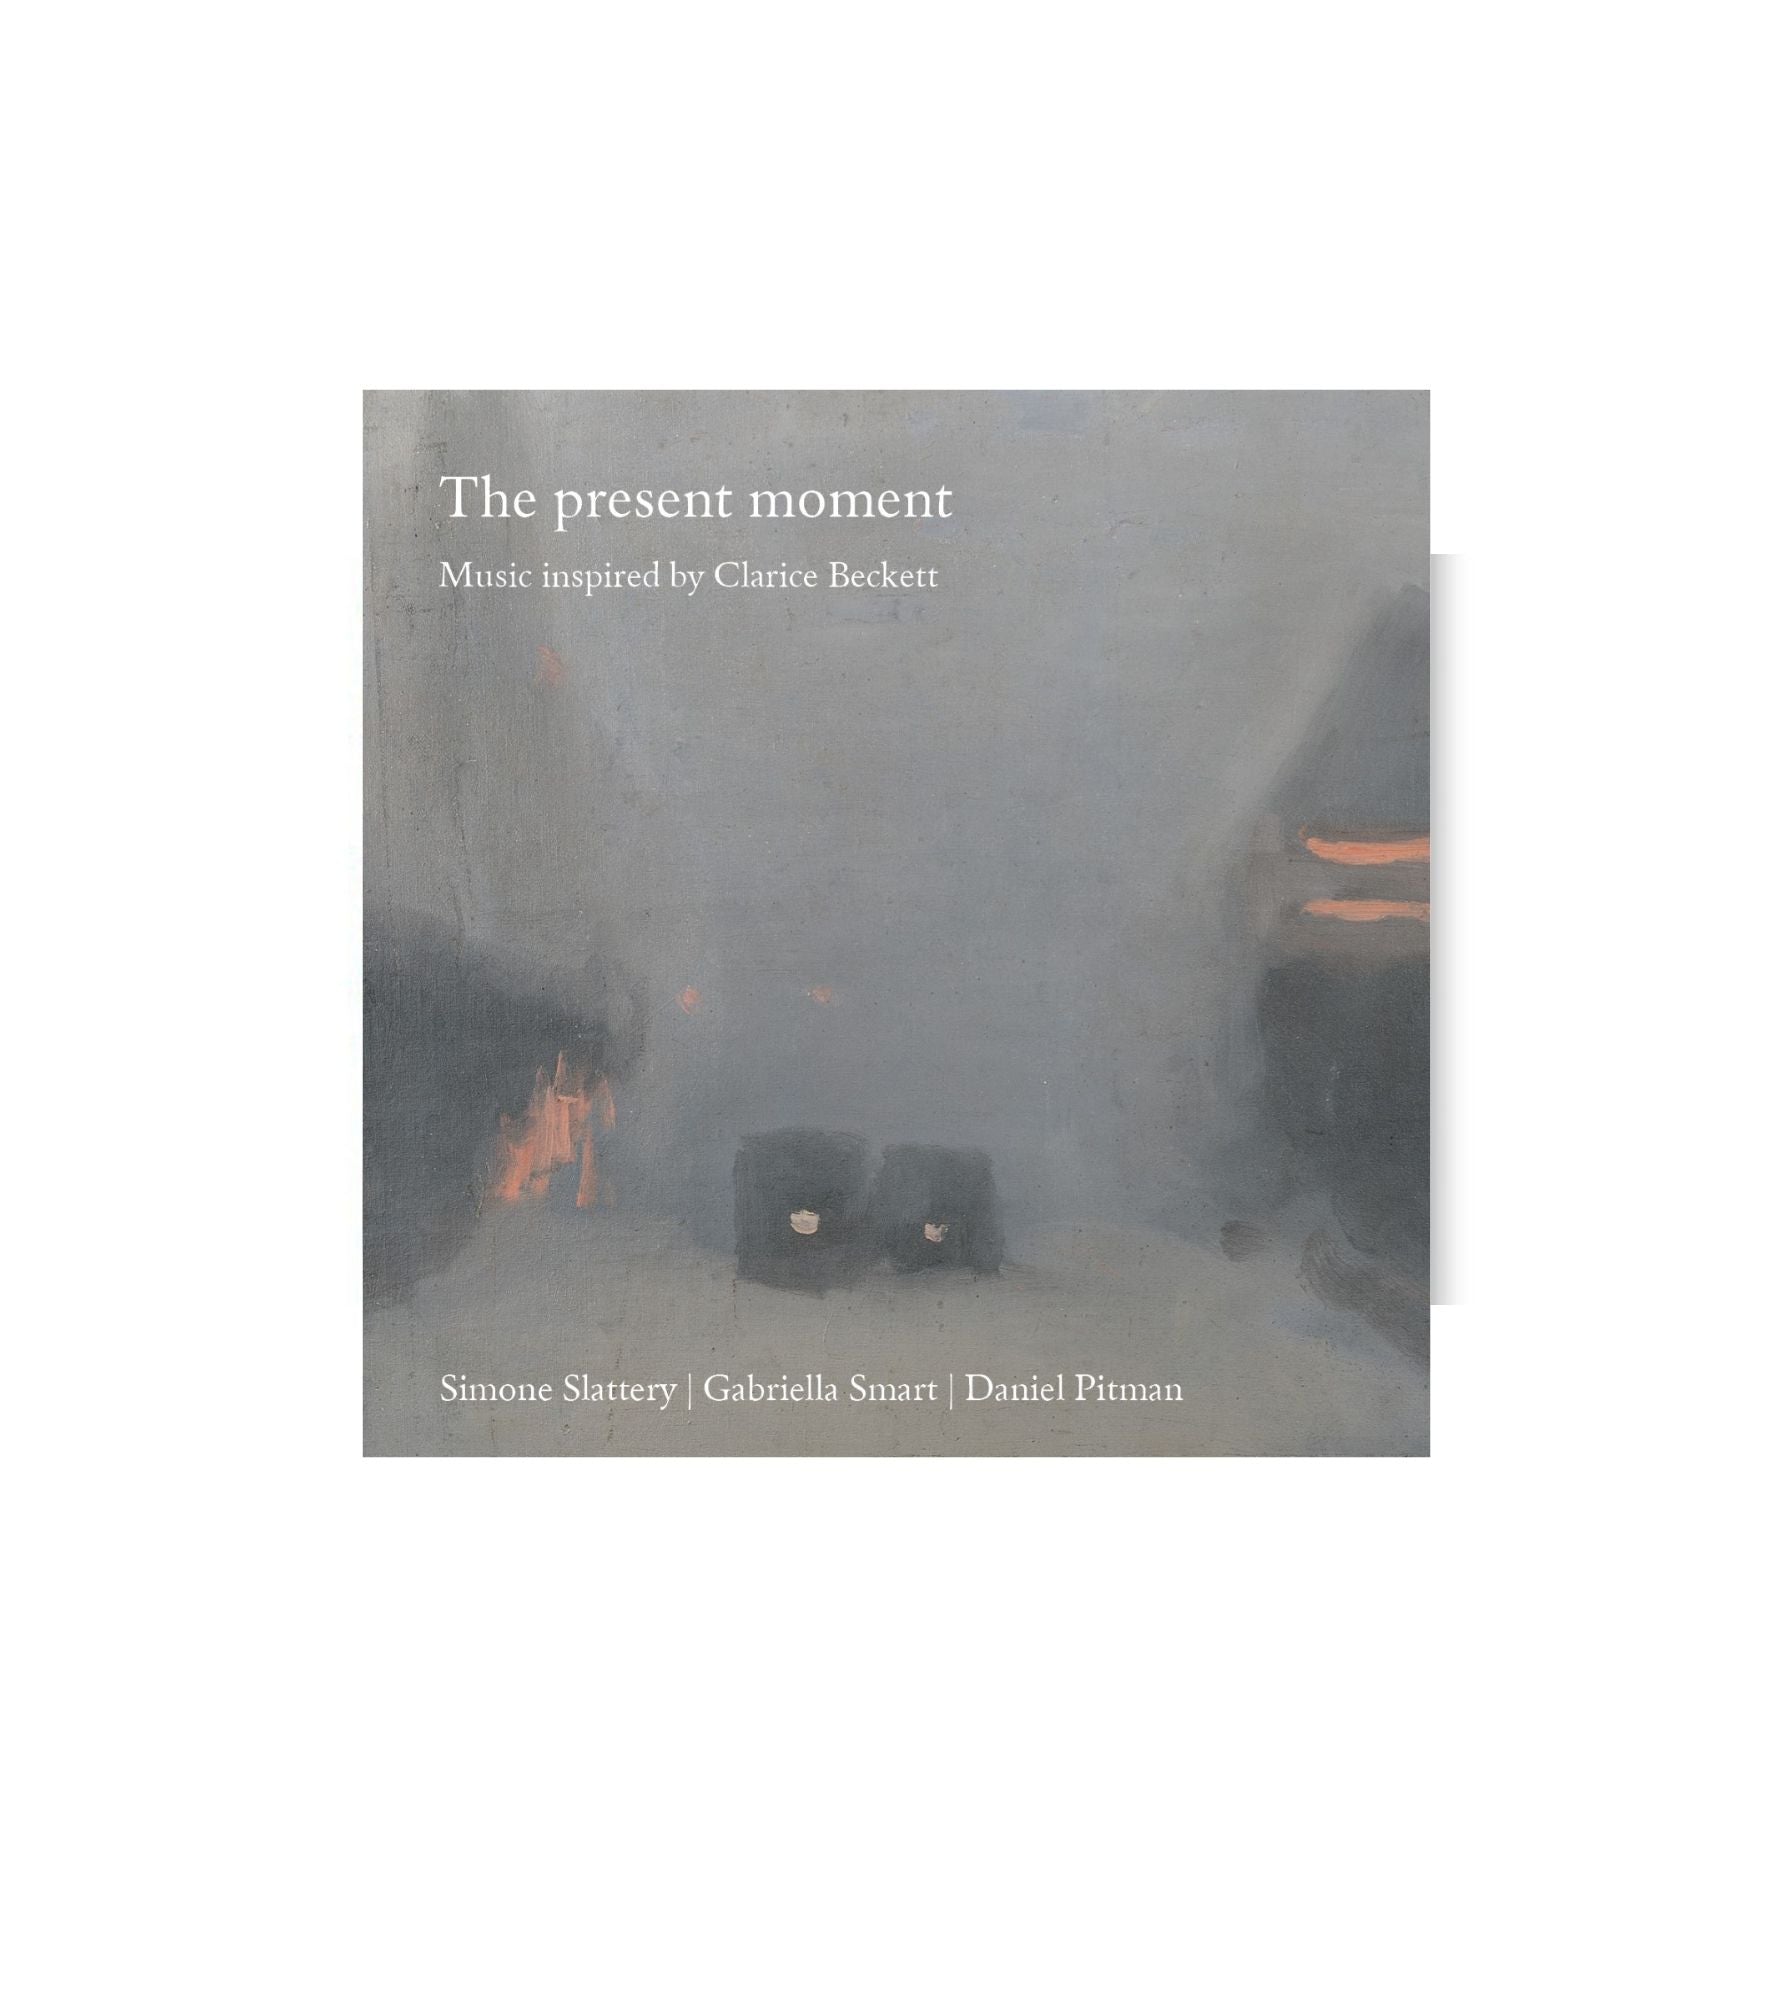 The present moment - Clarice Beckett CD